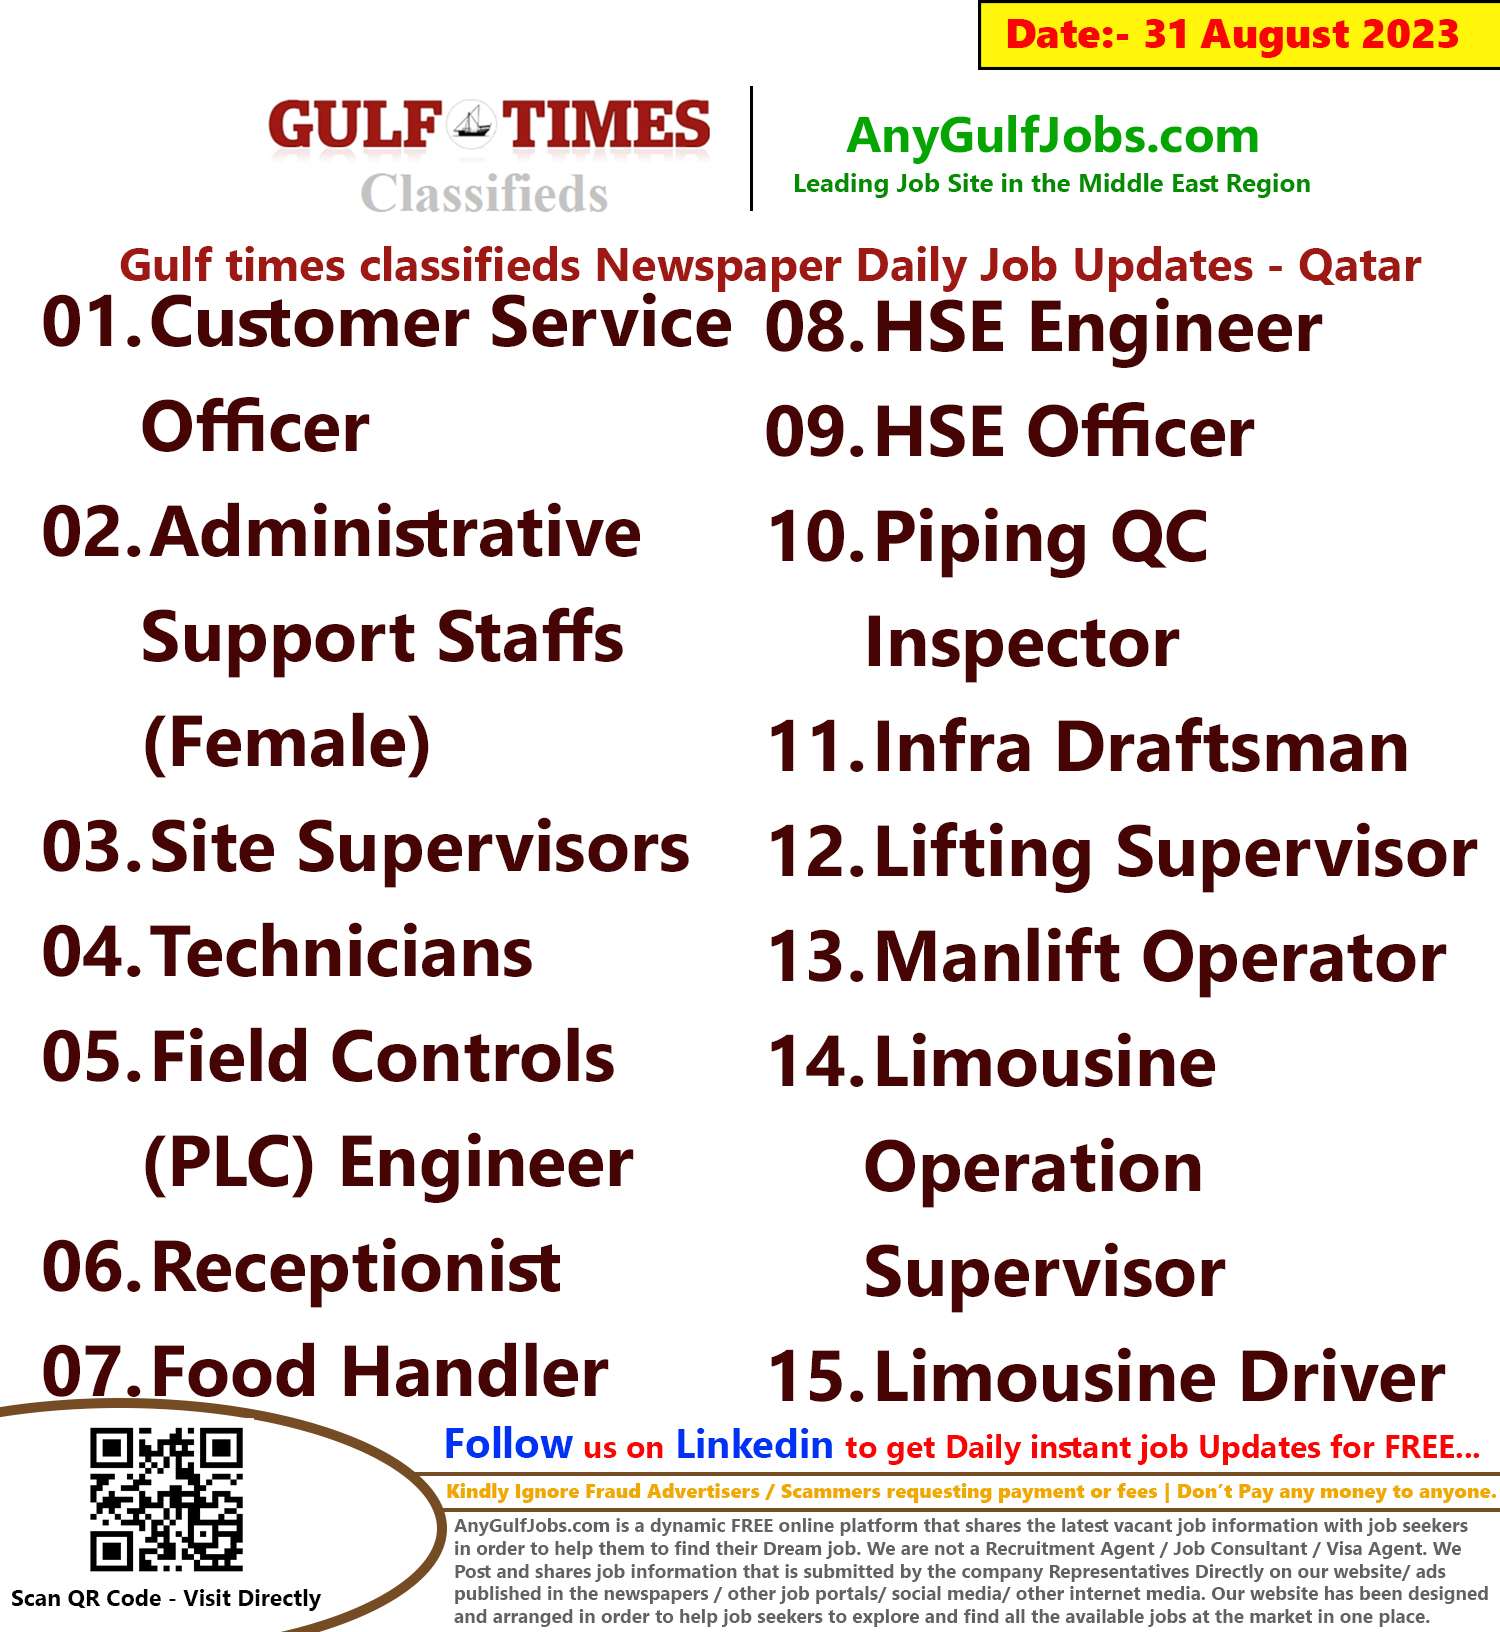 Gulf times classifieds Job Vacancies Qatar - 31 August 2023